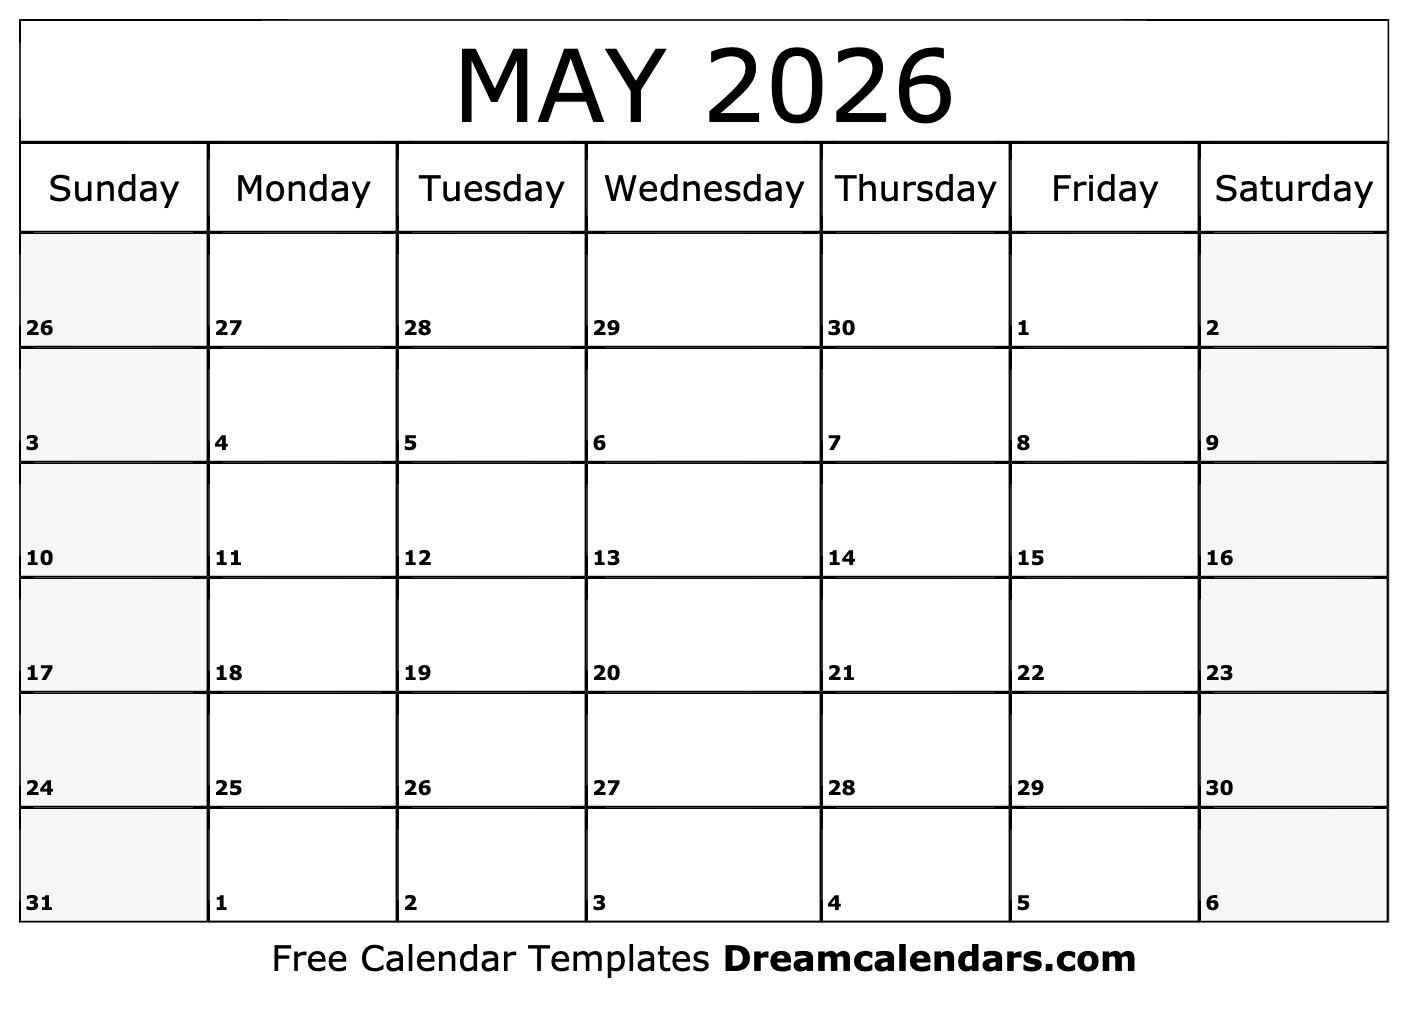 may-2026-calendar-free-blank-printable-with-holidays